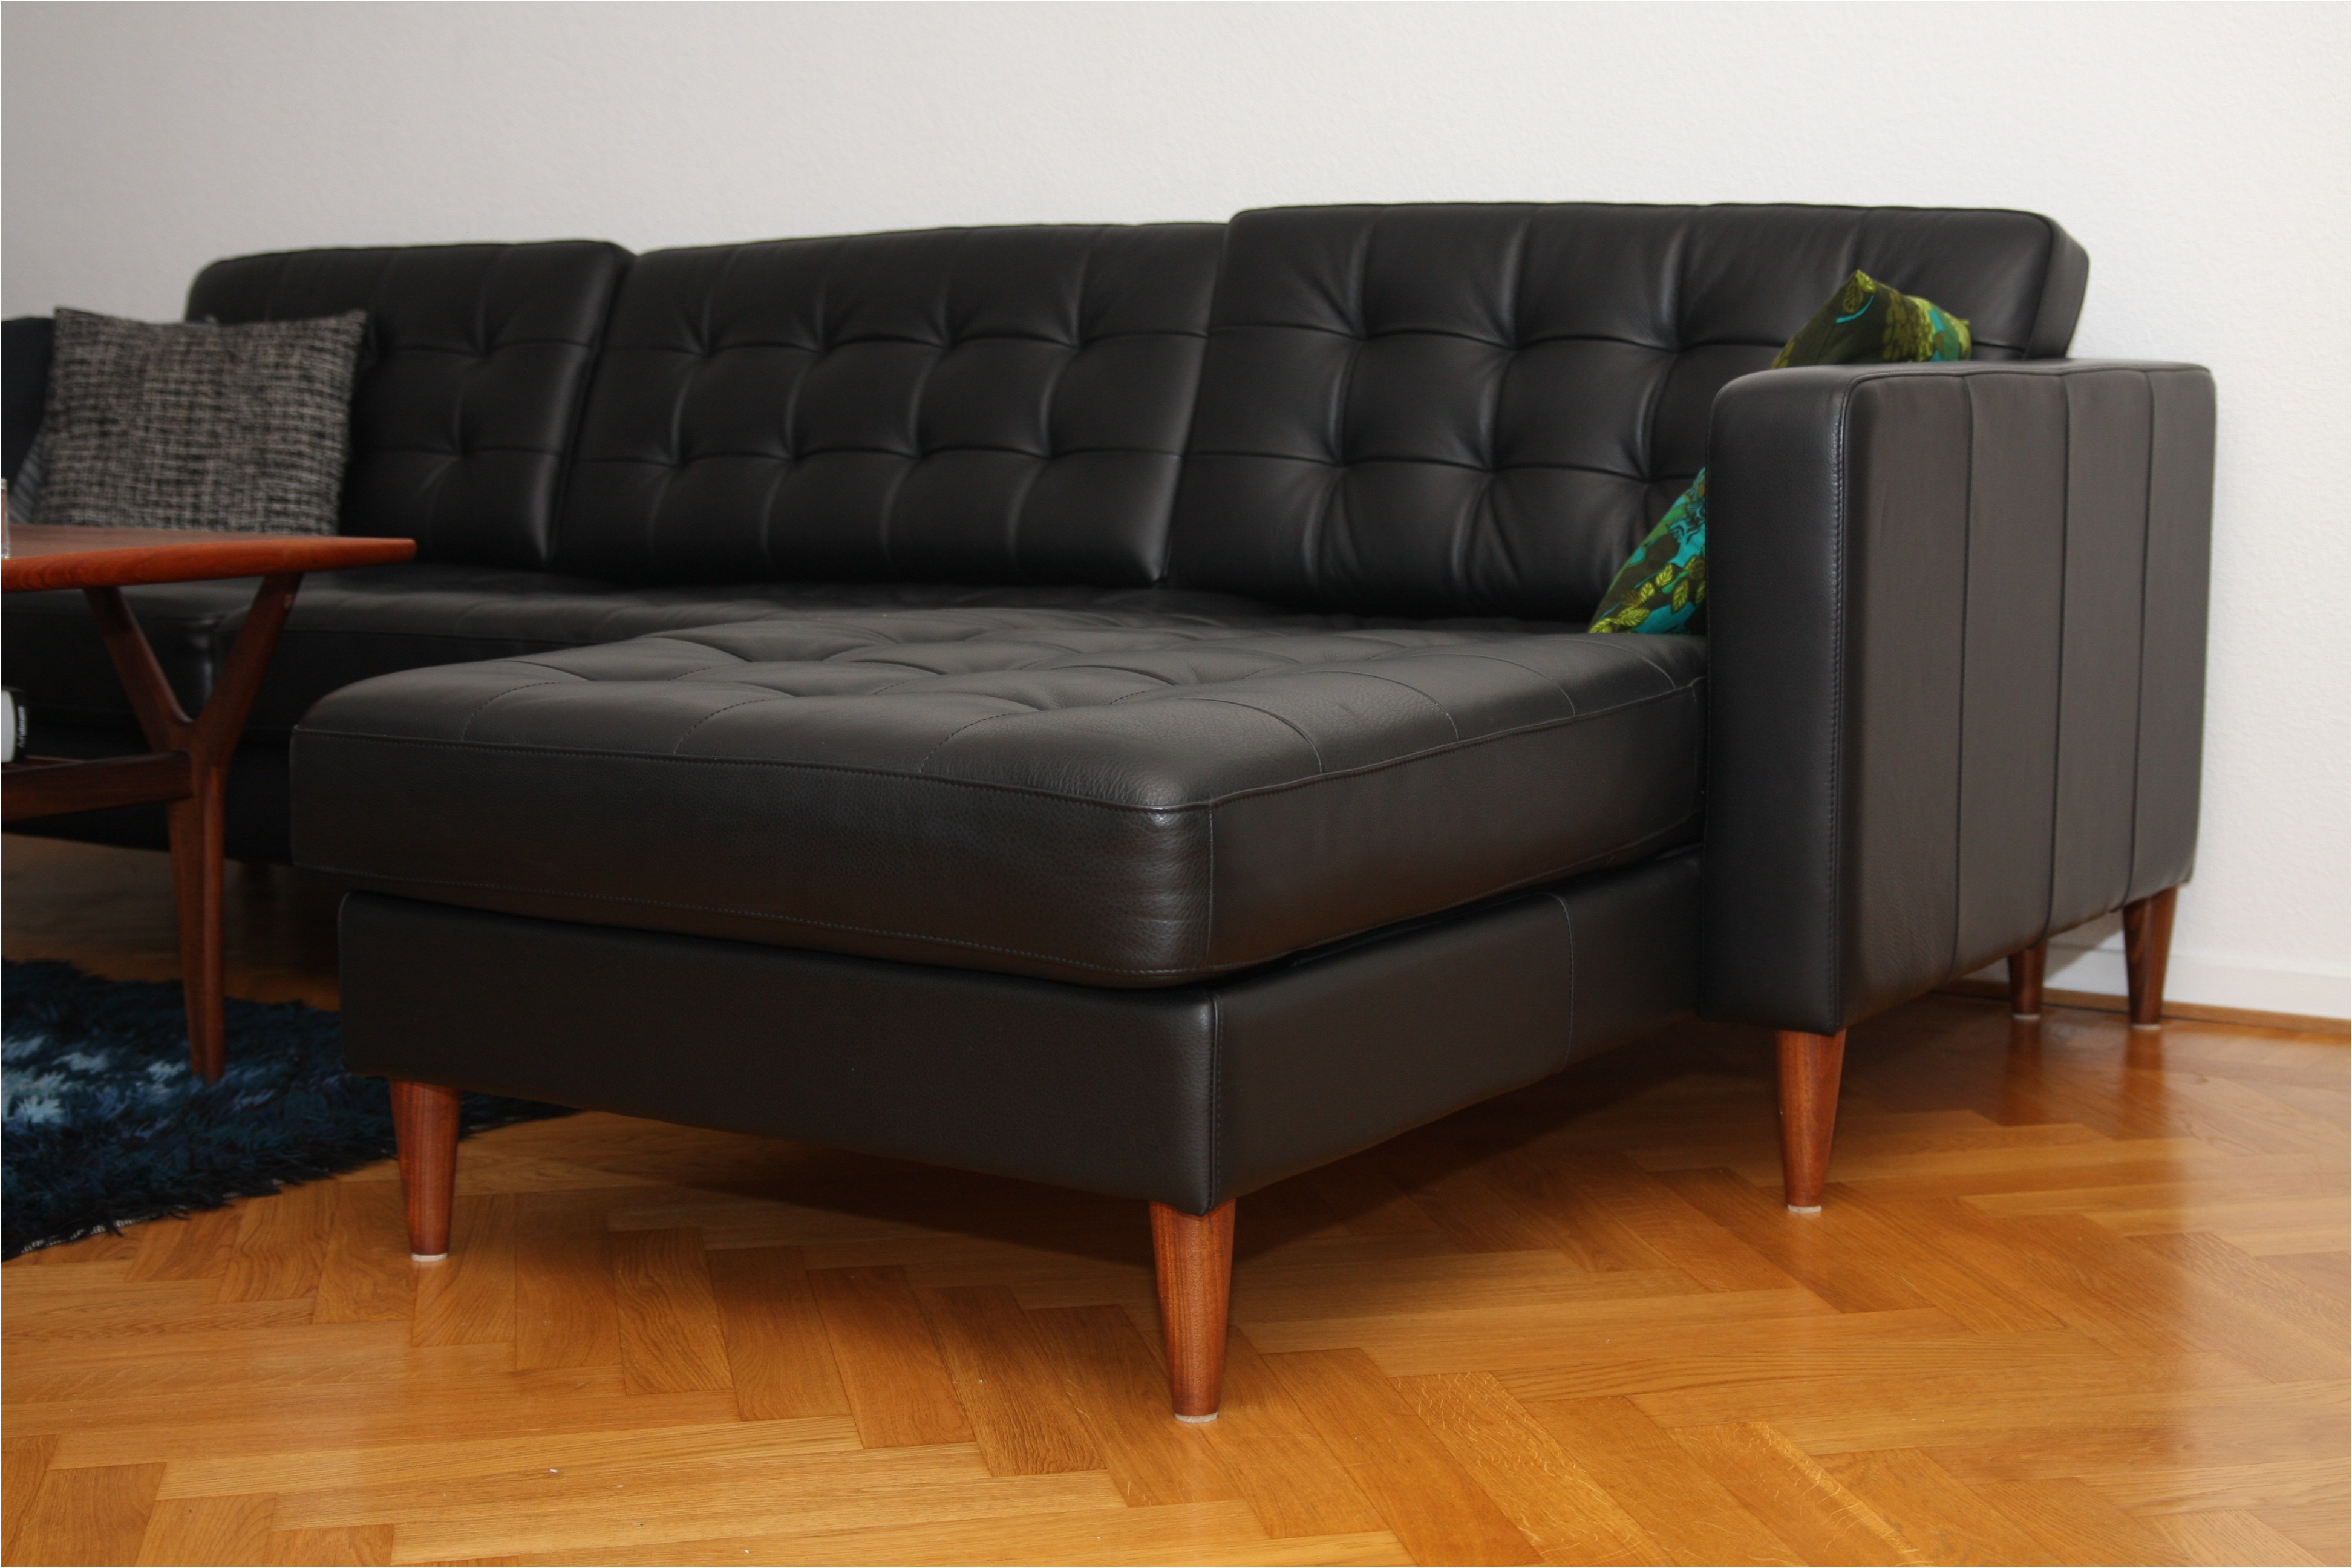 ikea schlafsofa friheten luxus amazing ikea karlstad sofa leather 8 review reviewstadikea bilder